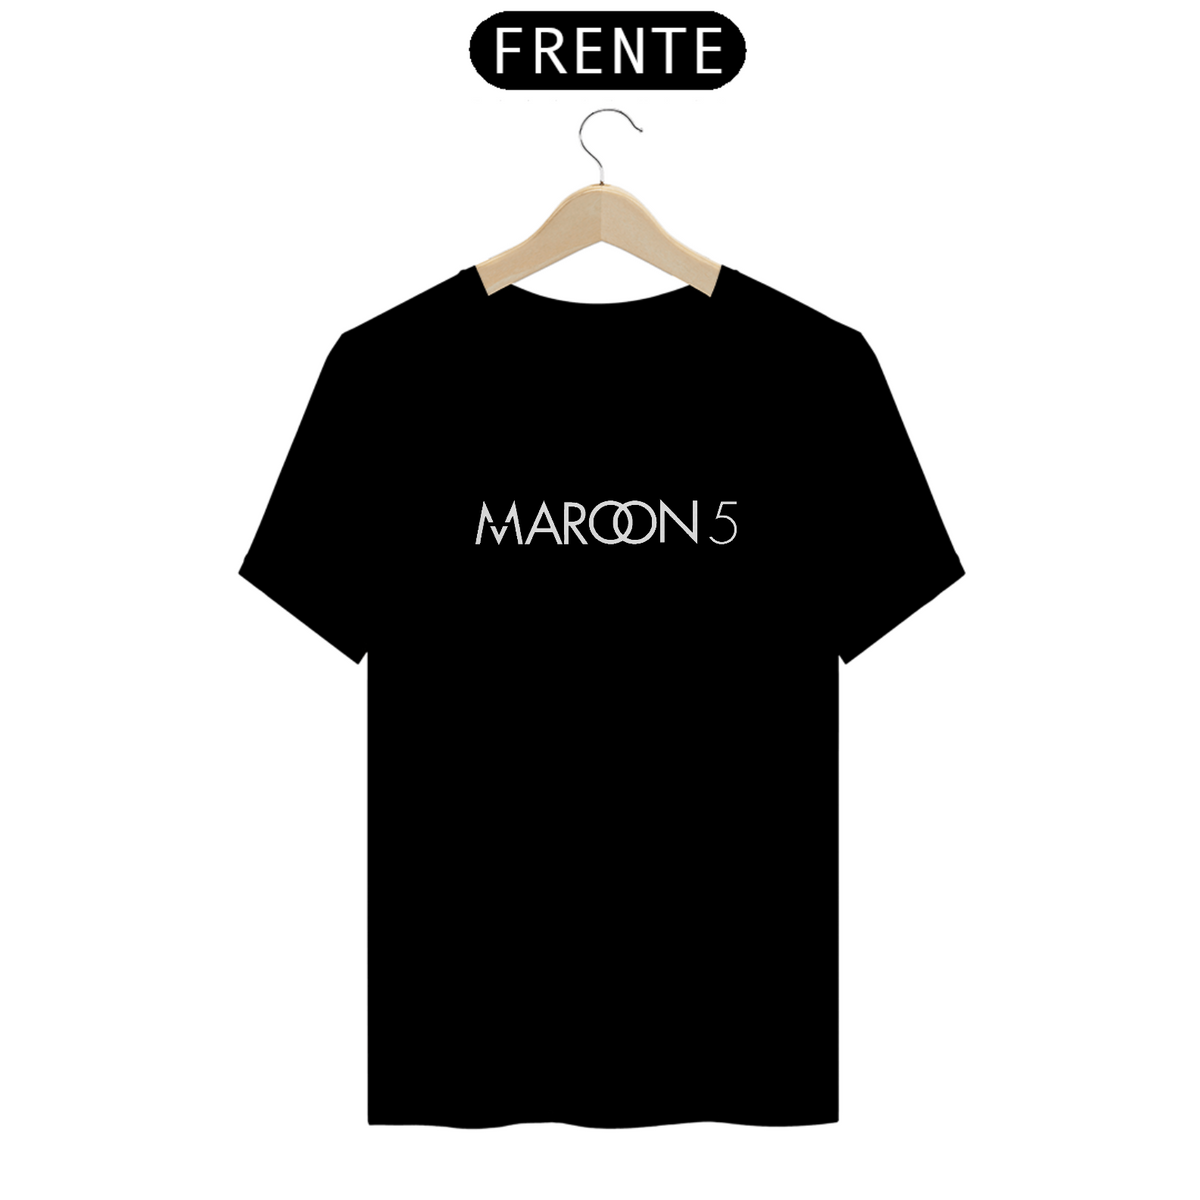 Nome do produto: Camiseta Maroon 5 - Classica